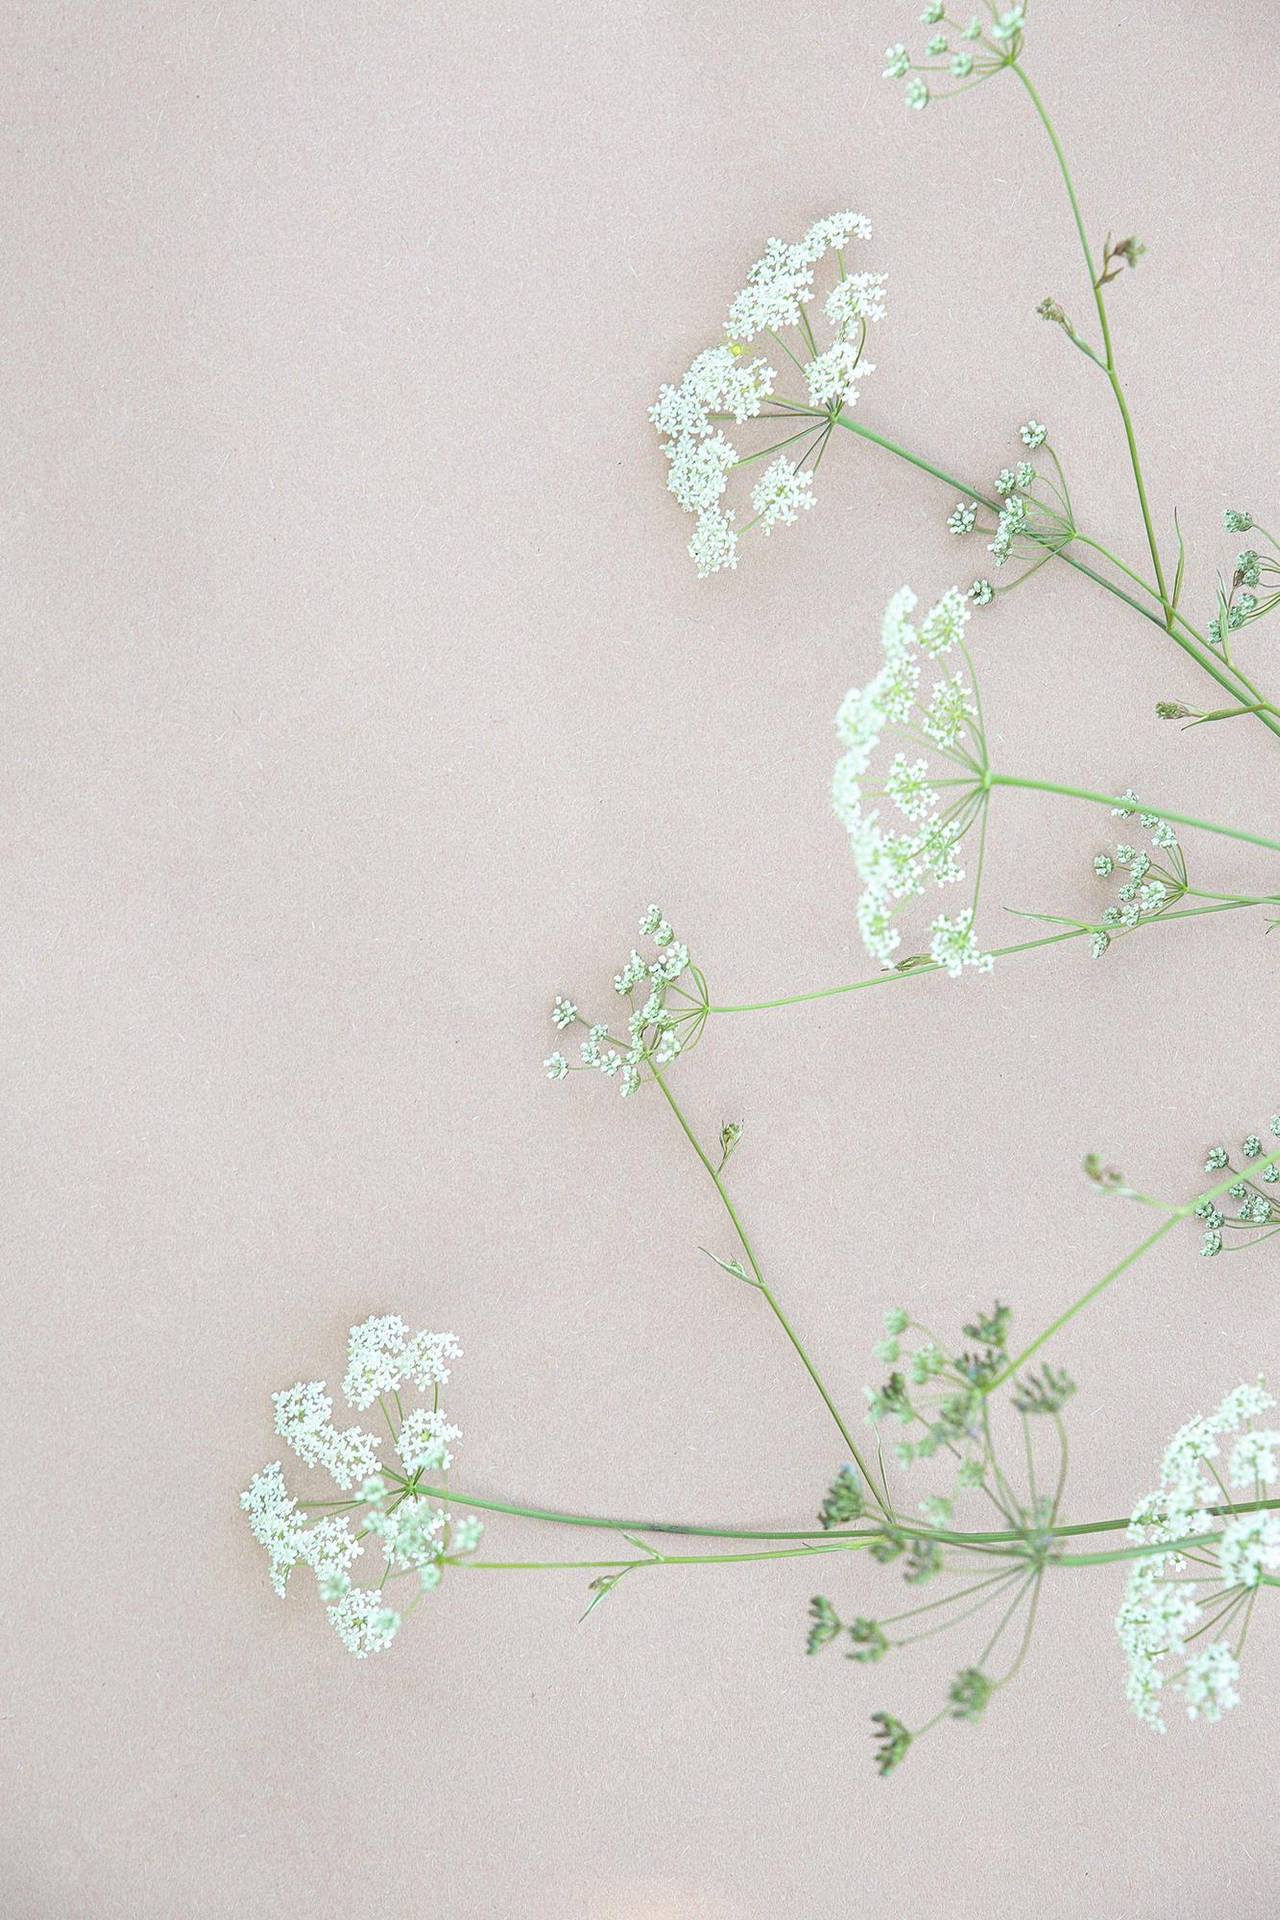 Simple White Flowers Aesthetic Wallpaper